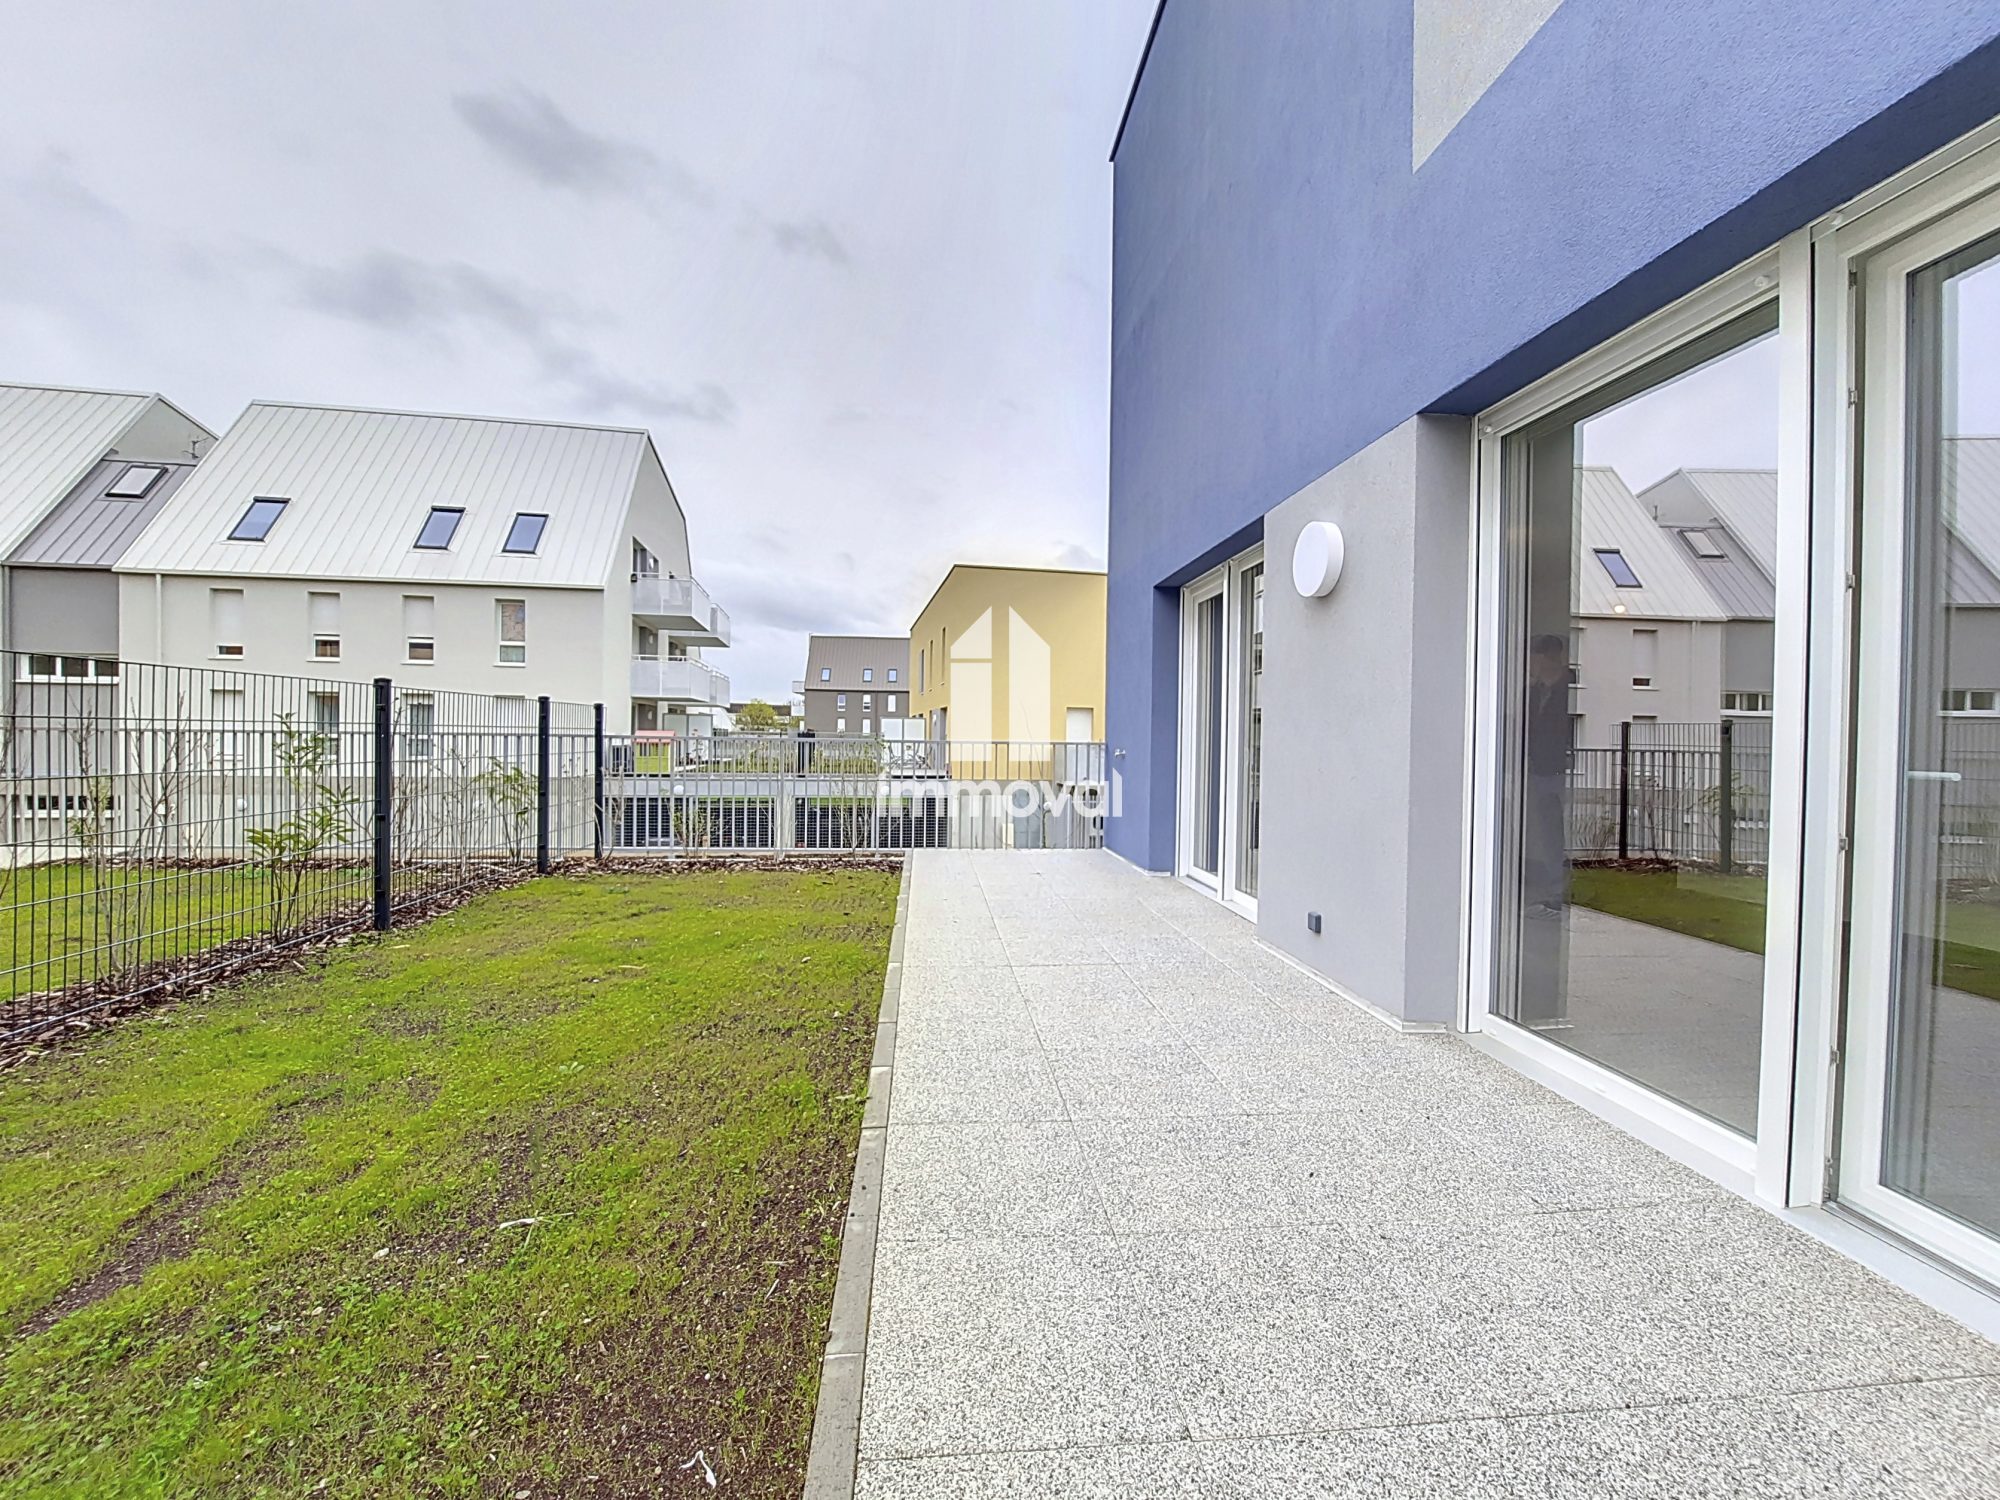 WOLFISHEIM - 3 pces en duplex neuf avec terrasse, jardin et park